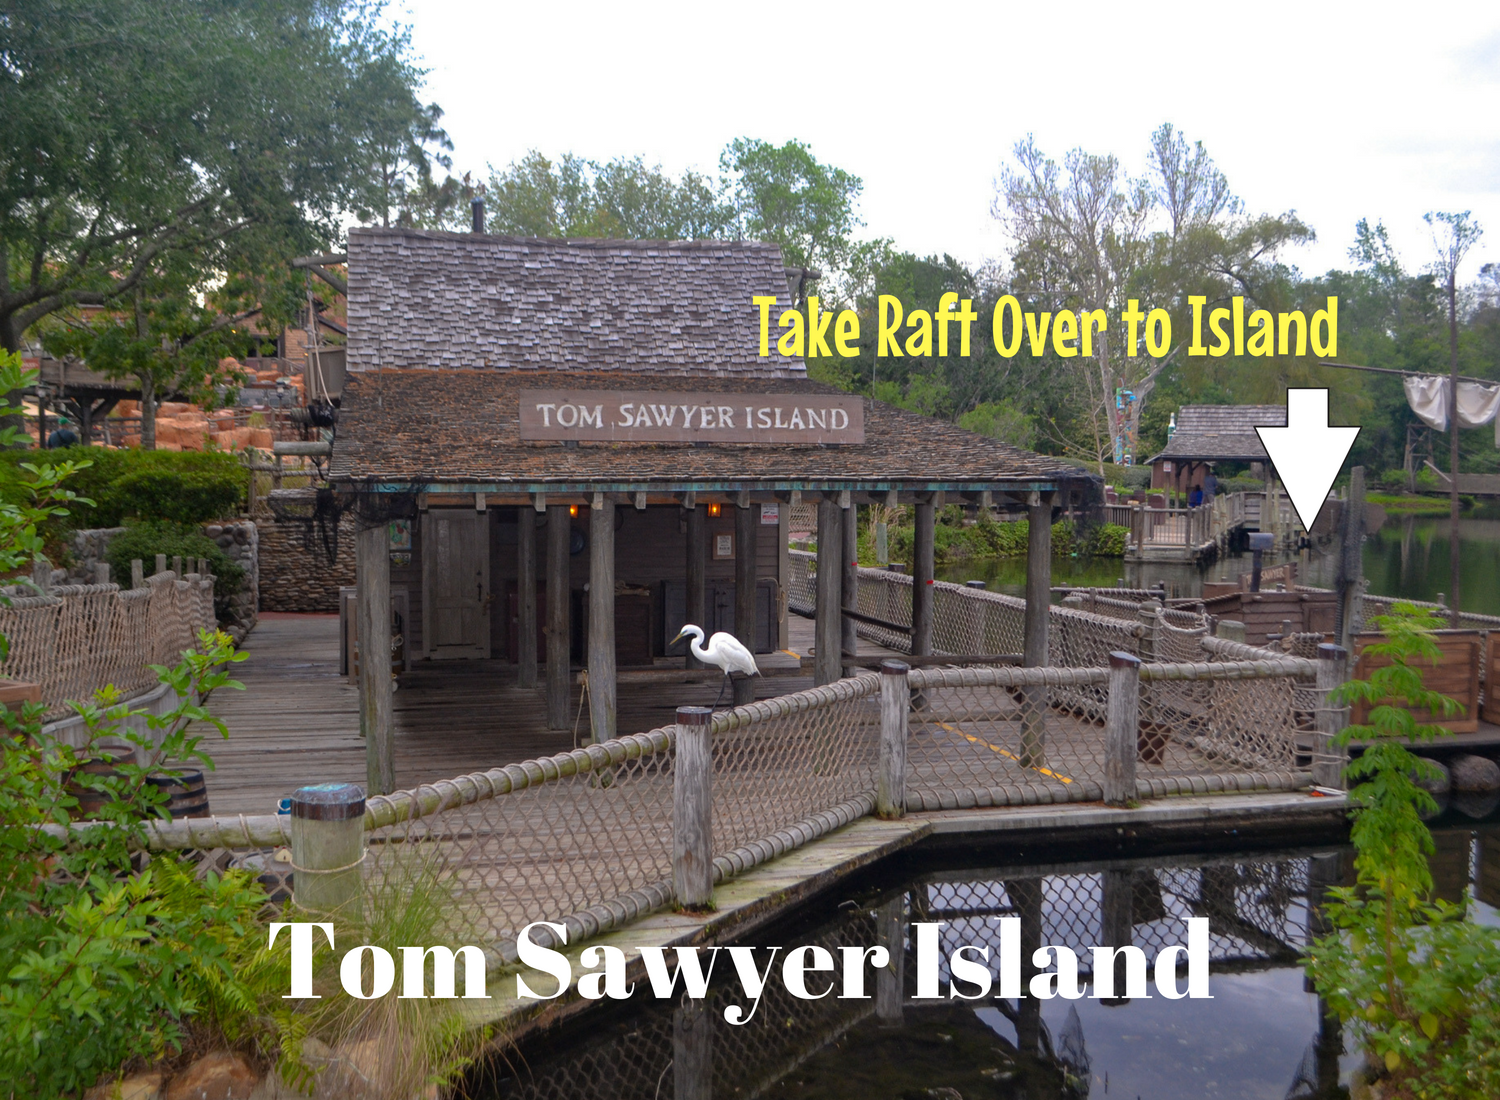 Tom Sawyer Island Boat Dock is a great sensory break area in Disney's Magic Kingdom